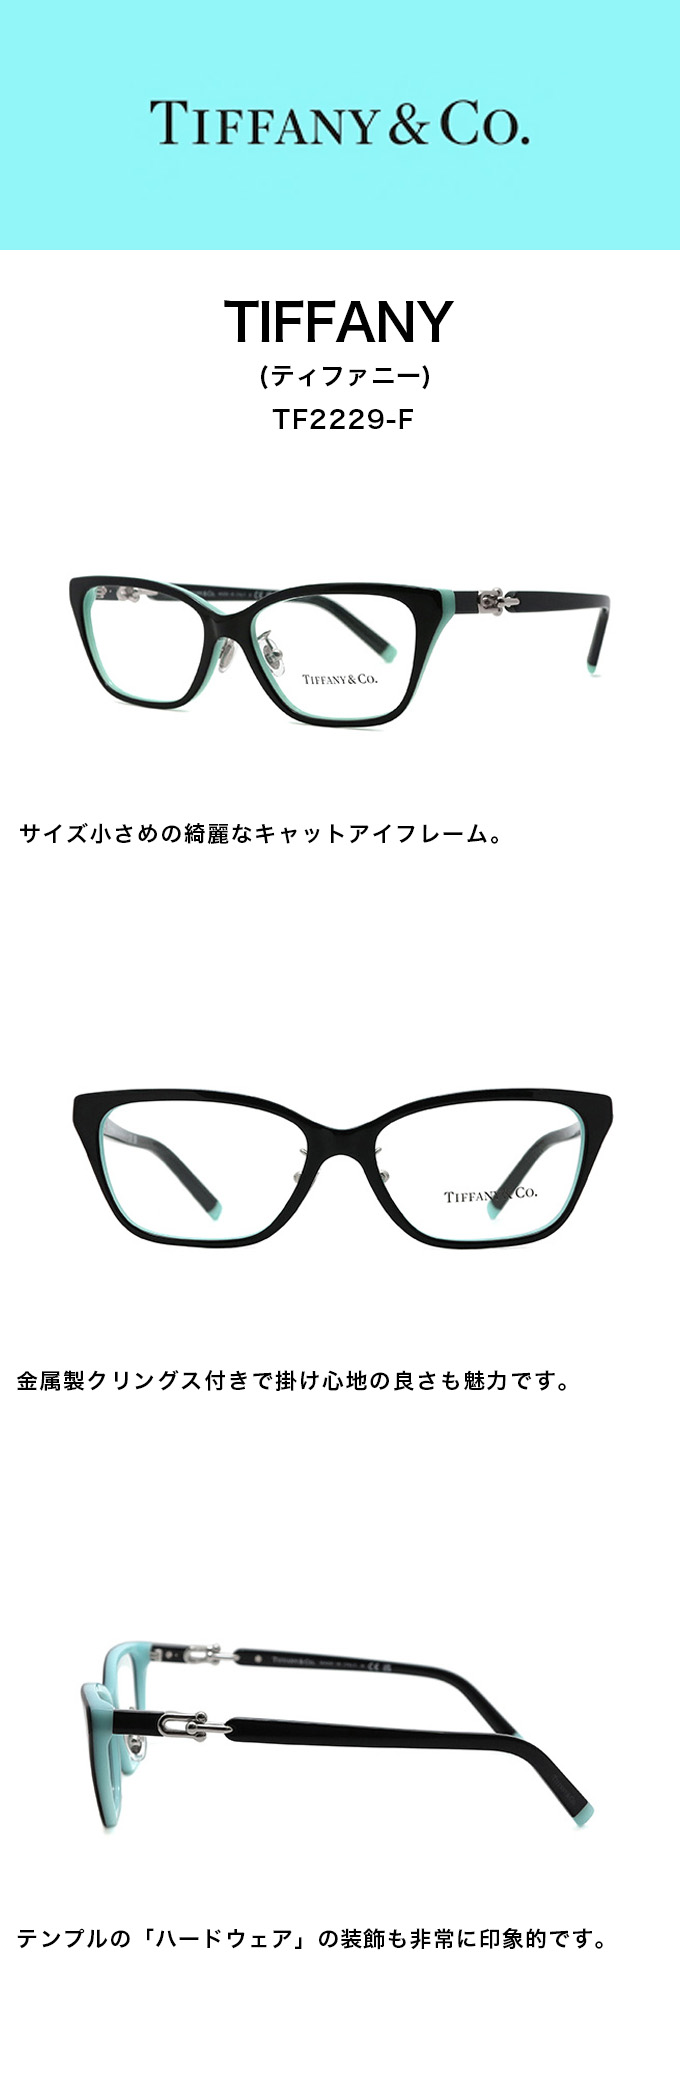 TIFFANY（ティファニー）tf2229-fカラー 8055(ブラック/シルバー) 53mmメンズ メガネ 眼鏡 サングラスtiffany  tf2229-f【店頭受取対応商品】